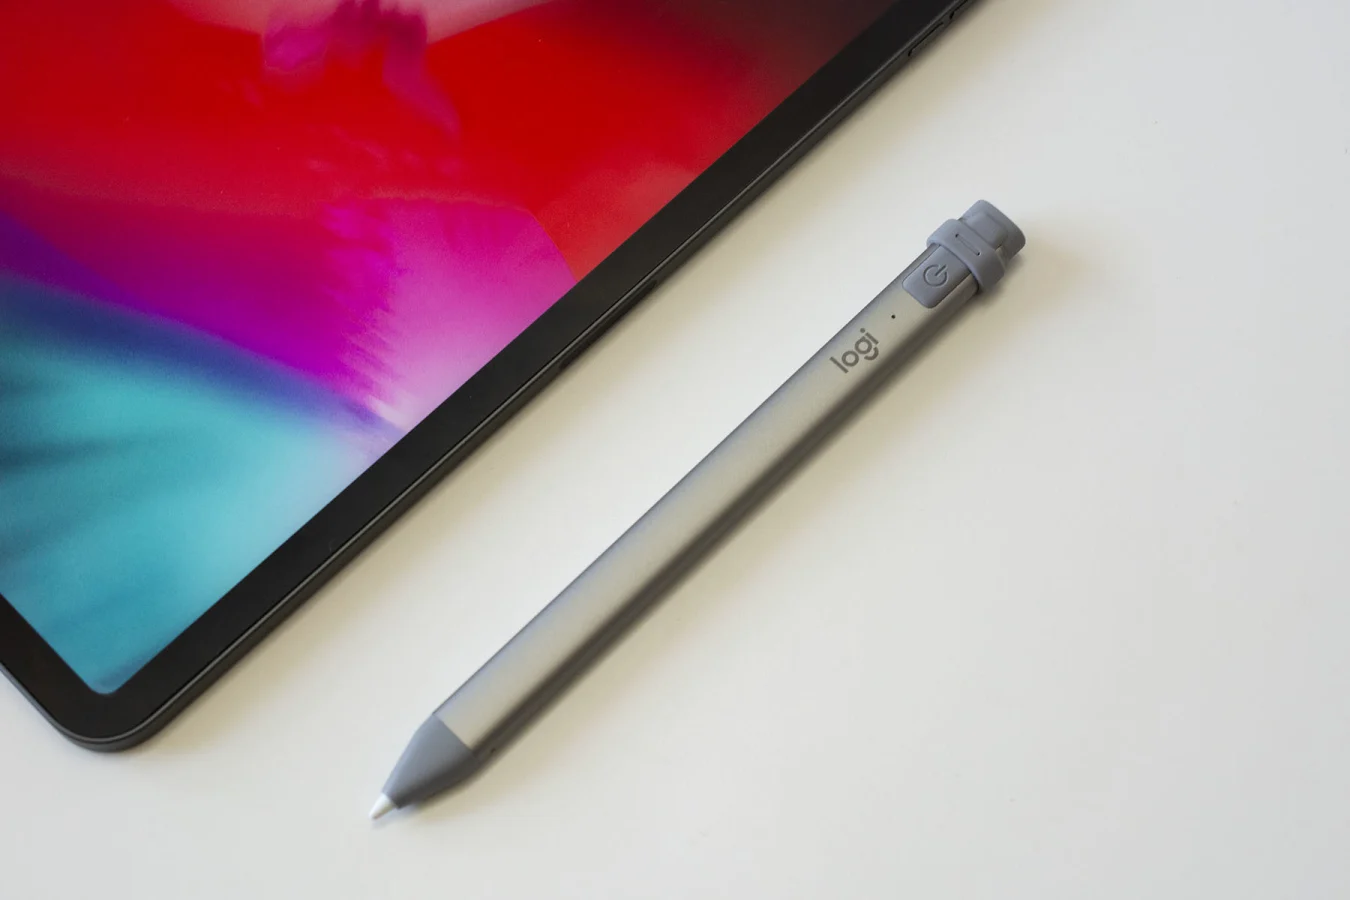 The Apple Pencil lacks a USB-C port, so Logitech has updated its Crayon stylus